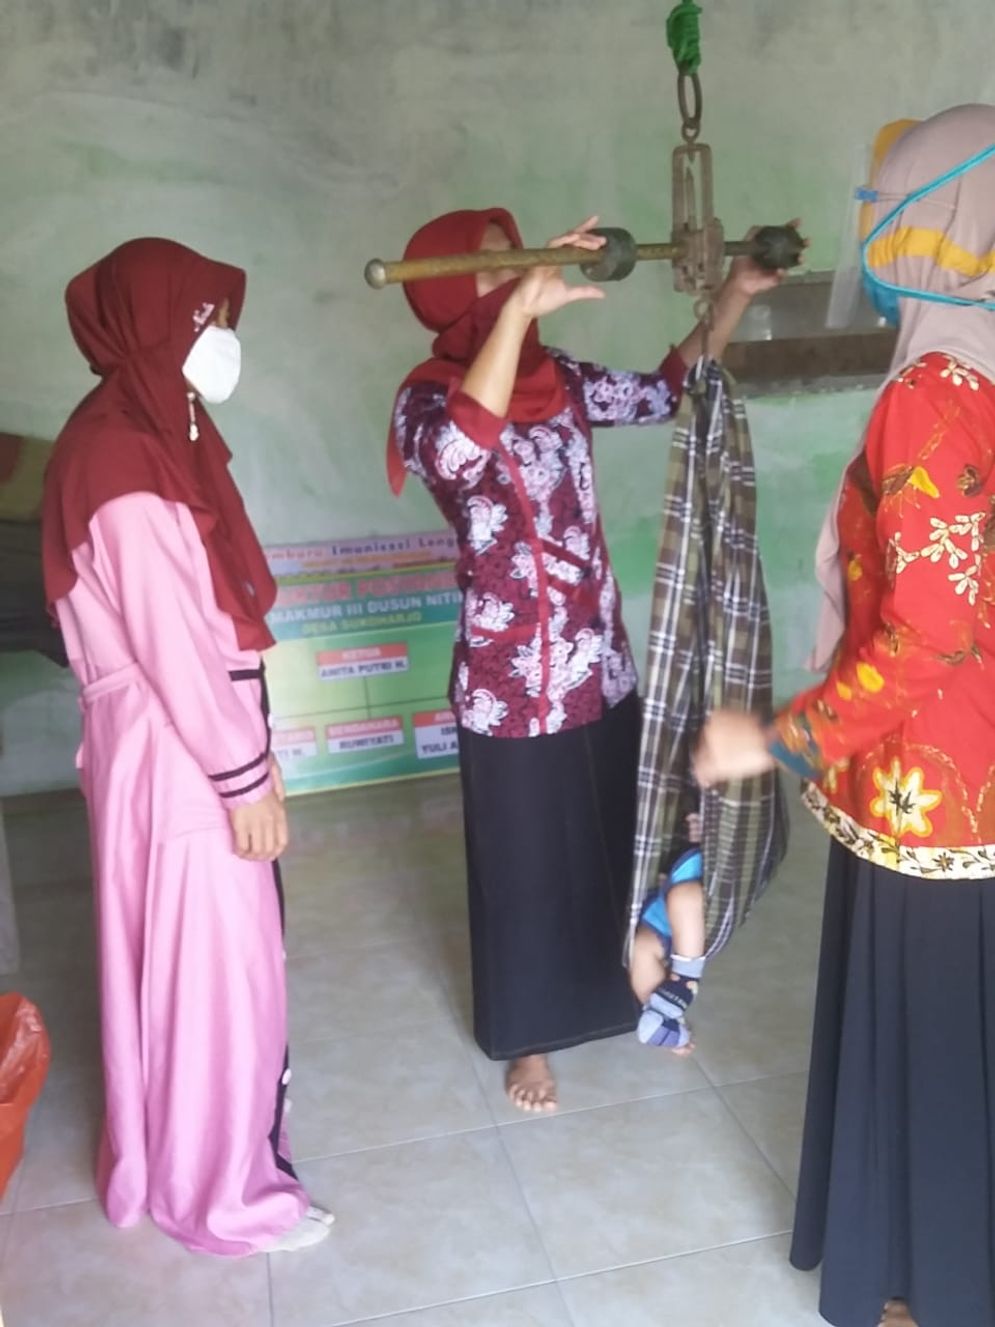 Kegiatan Posyandu  di Dusun Jarum Desa Sukoharjo, Wajib Bawa Sarung Sendiri untuk Timbang